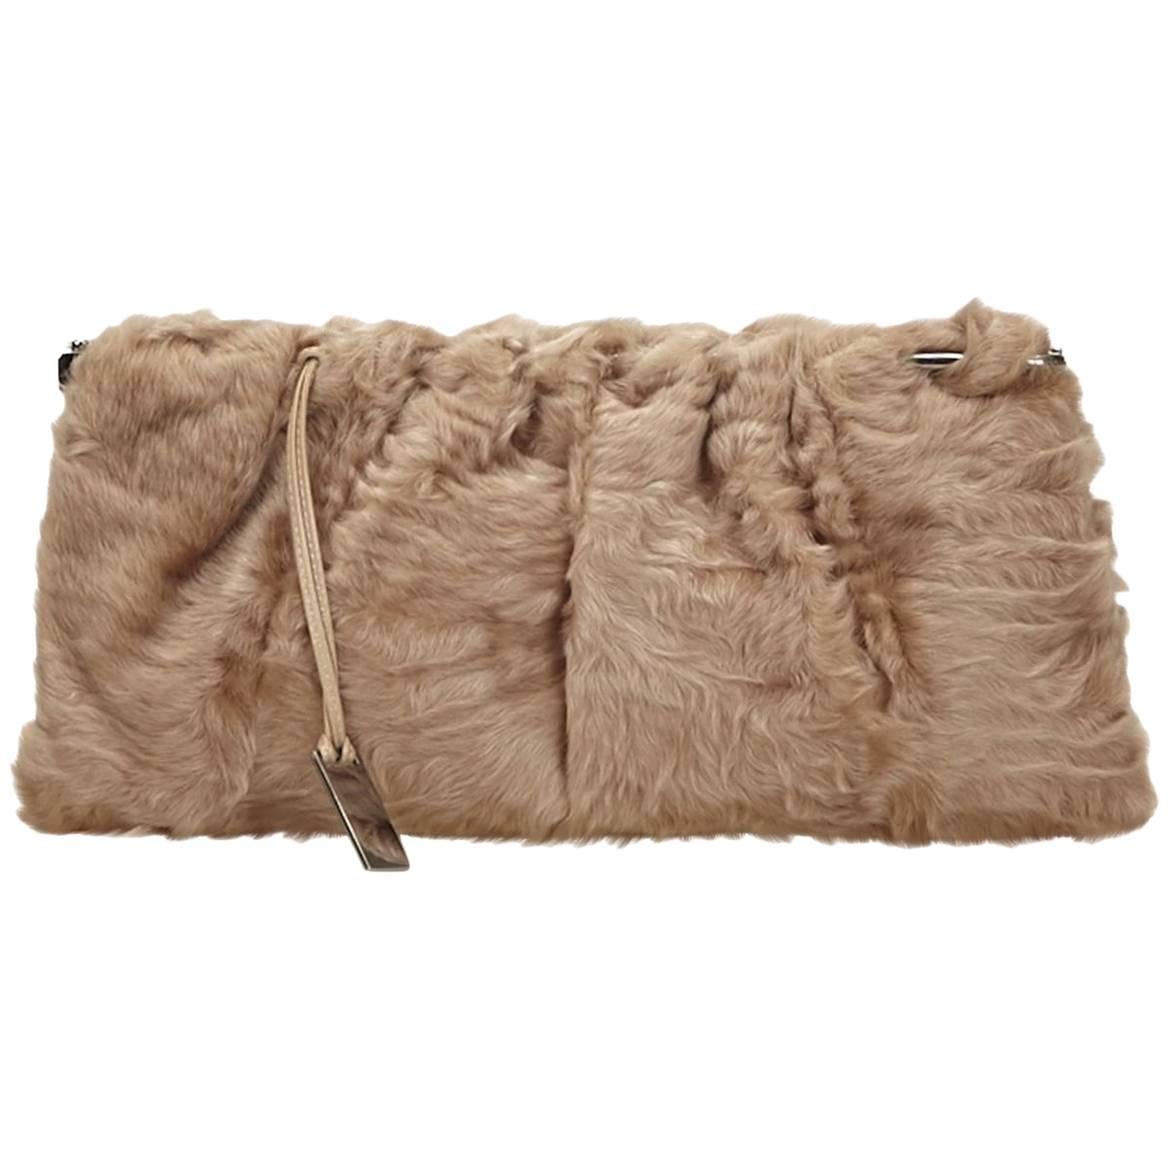 Rare Gucci by Tom Ford 1999 Nude Fur Clutch Bag Purse